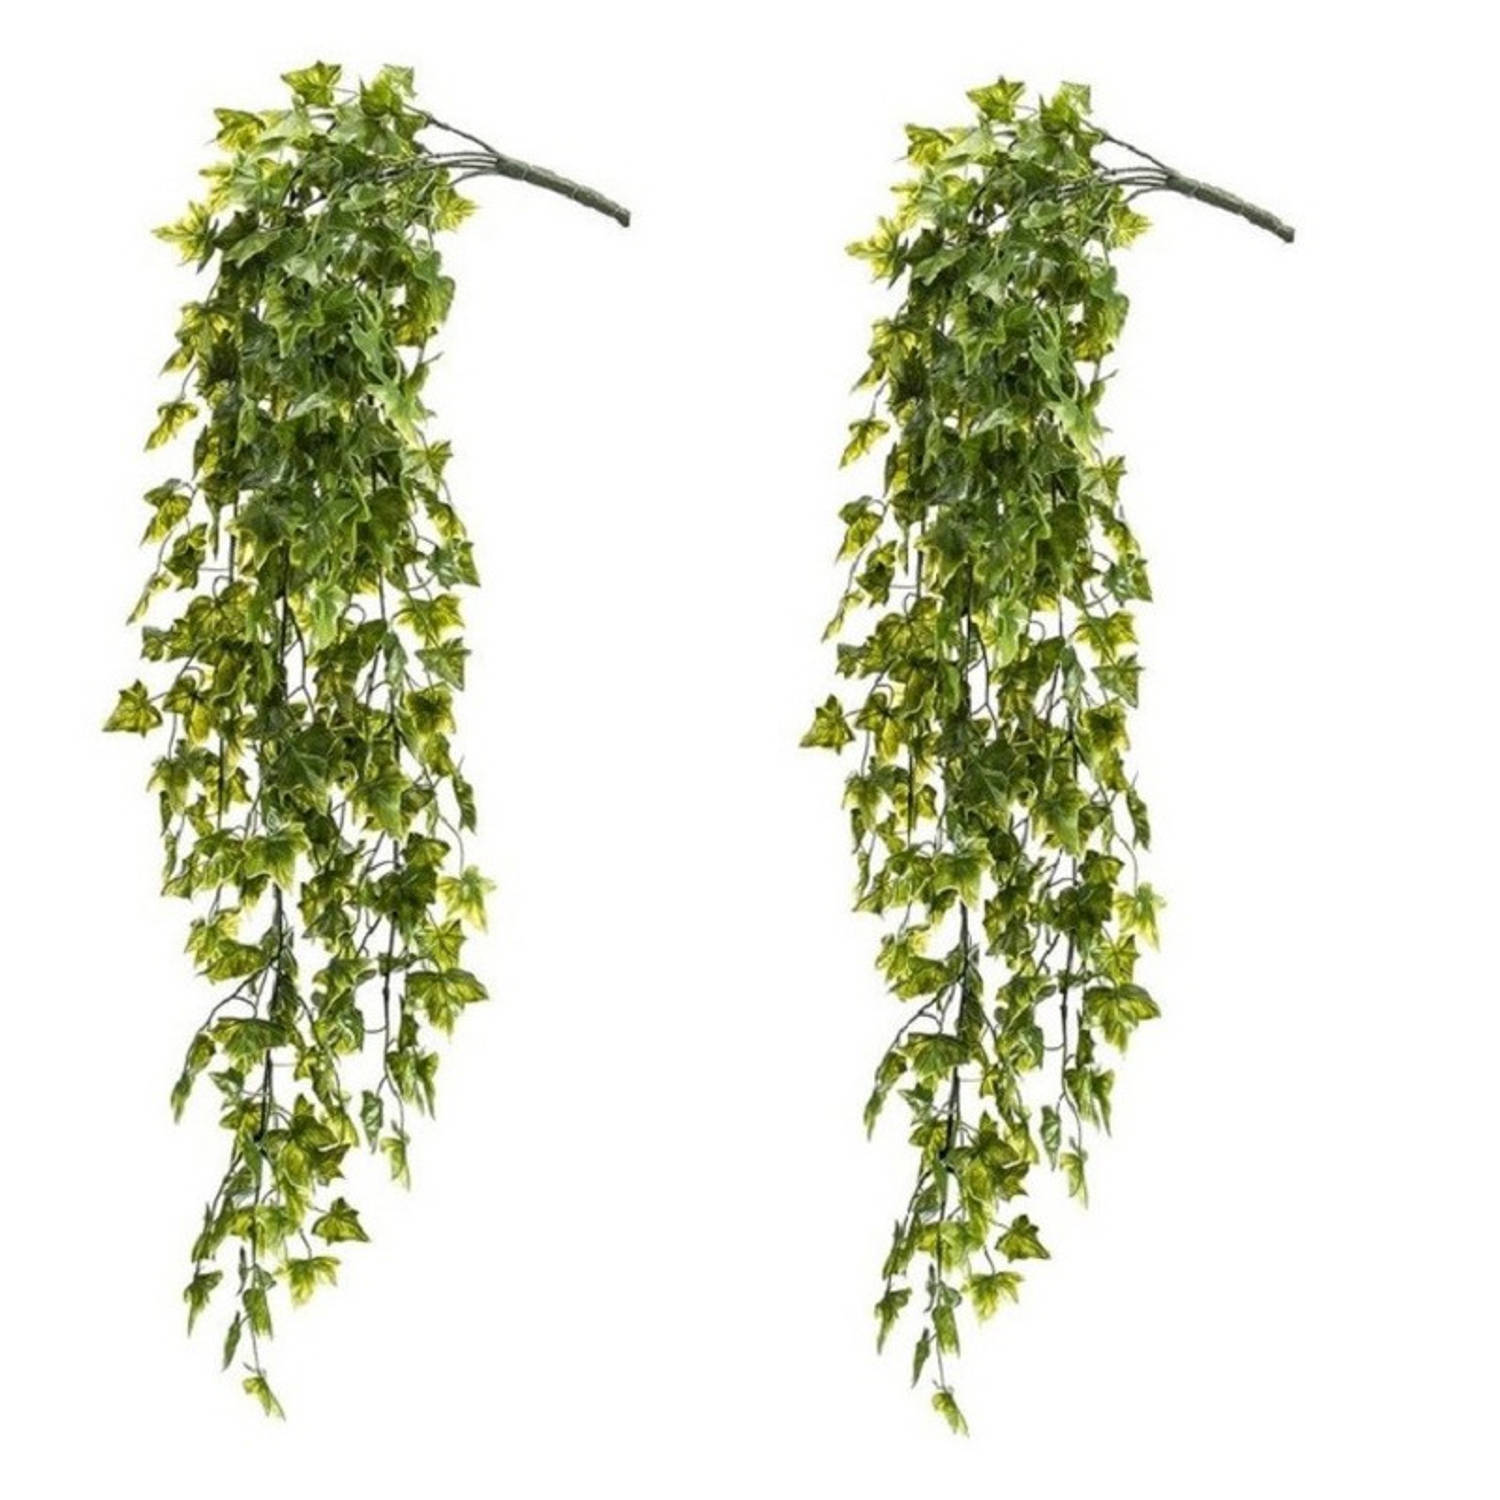 2x Kunstplant groene klimop hedera hangplant-tak 75 cm UV bestendig